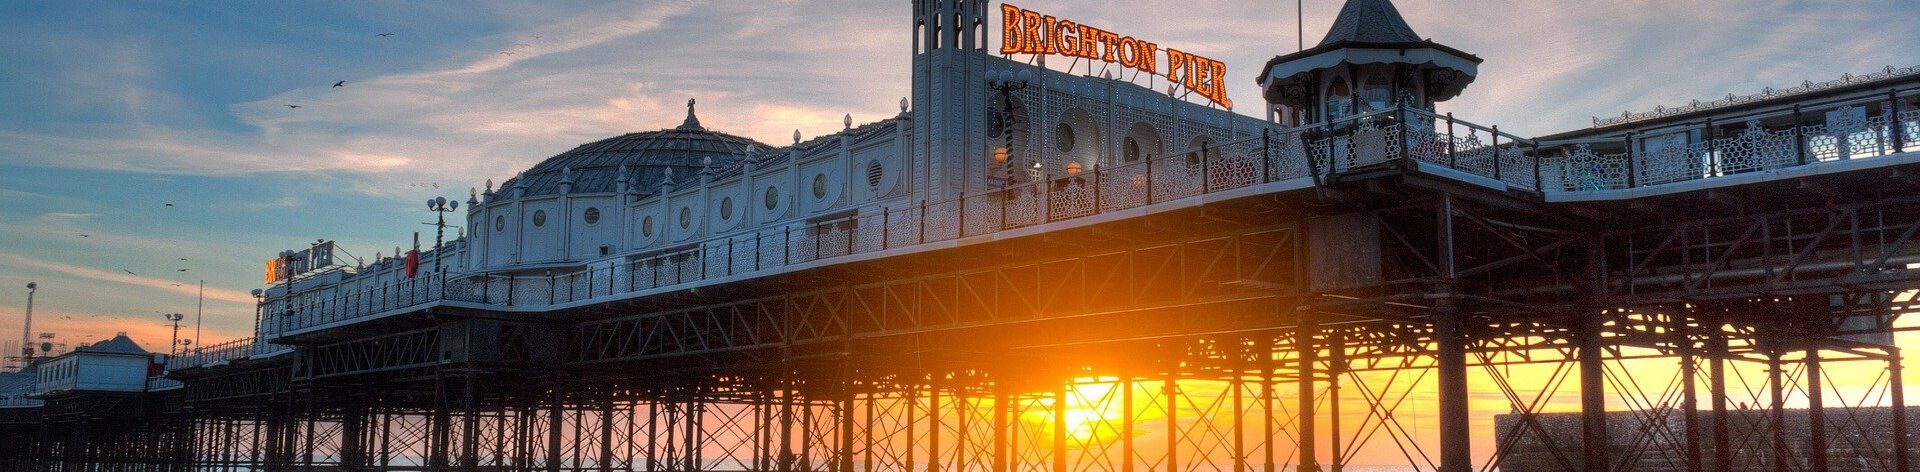 Sunset shot of Brighton Pier